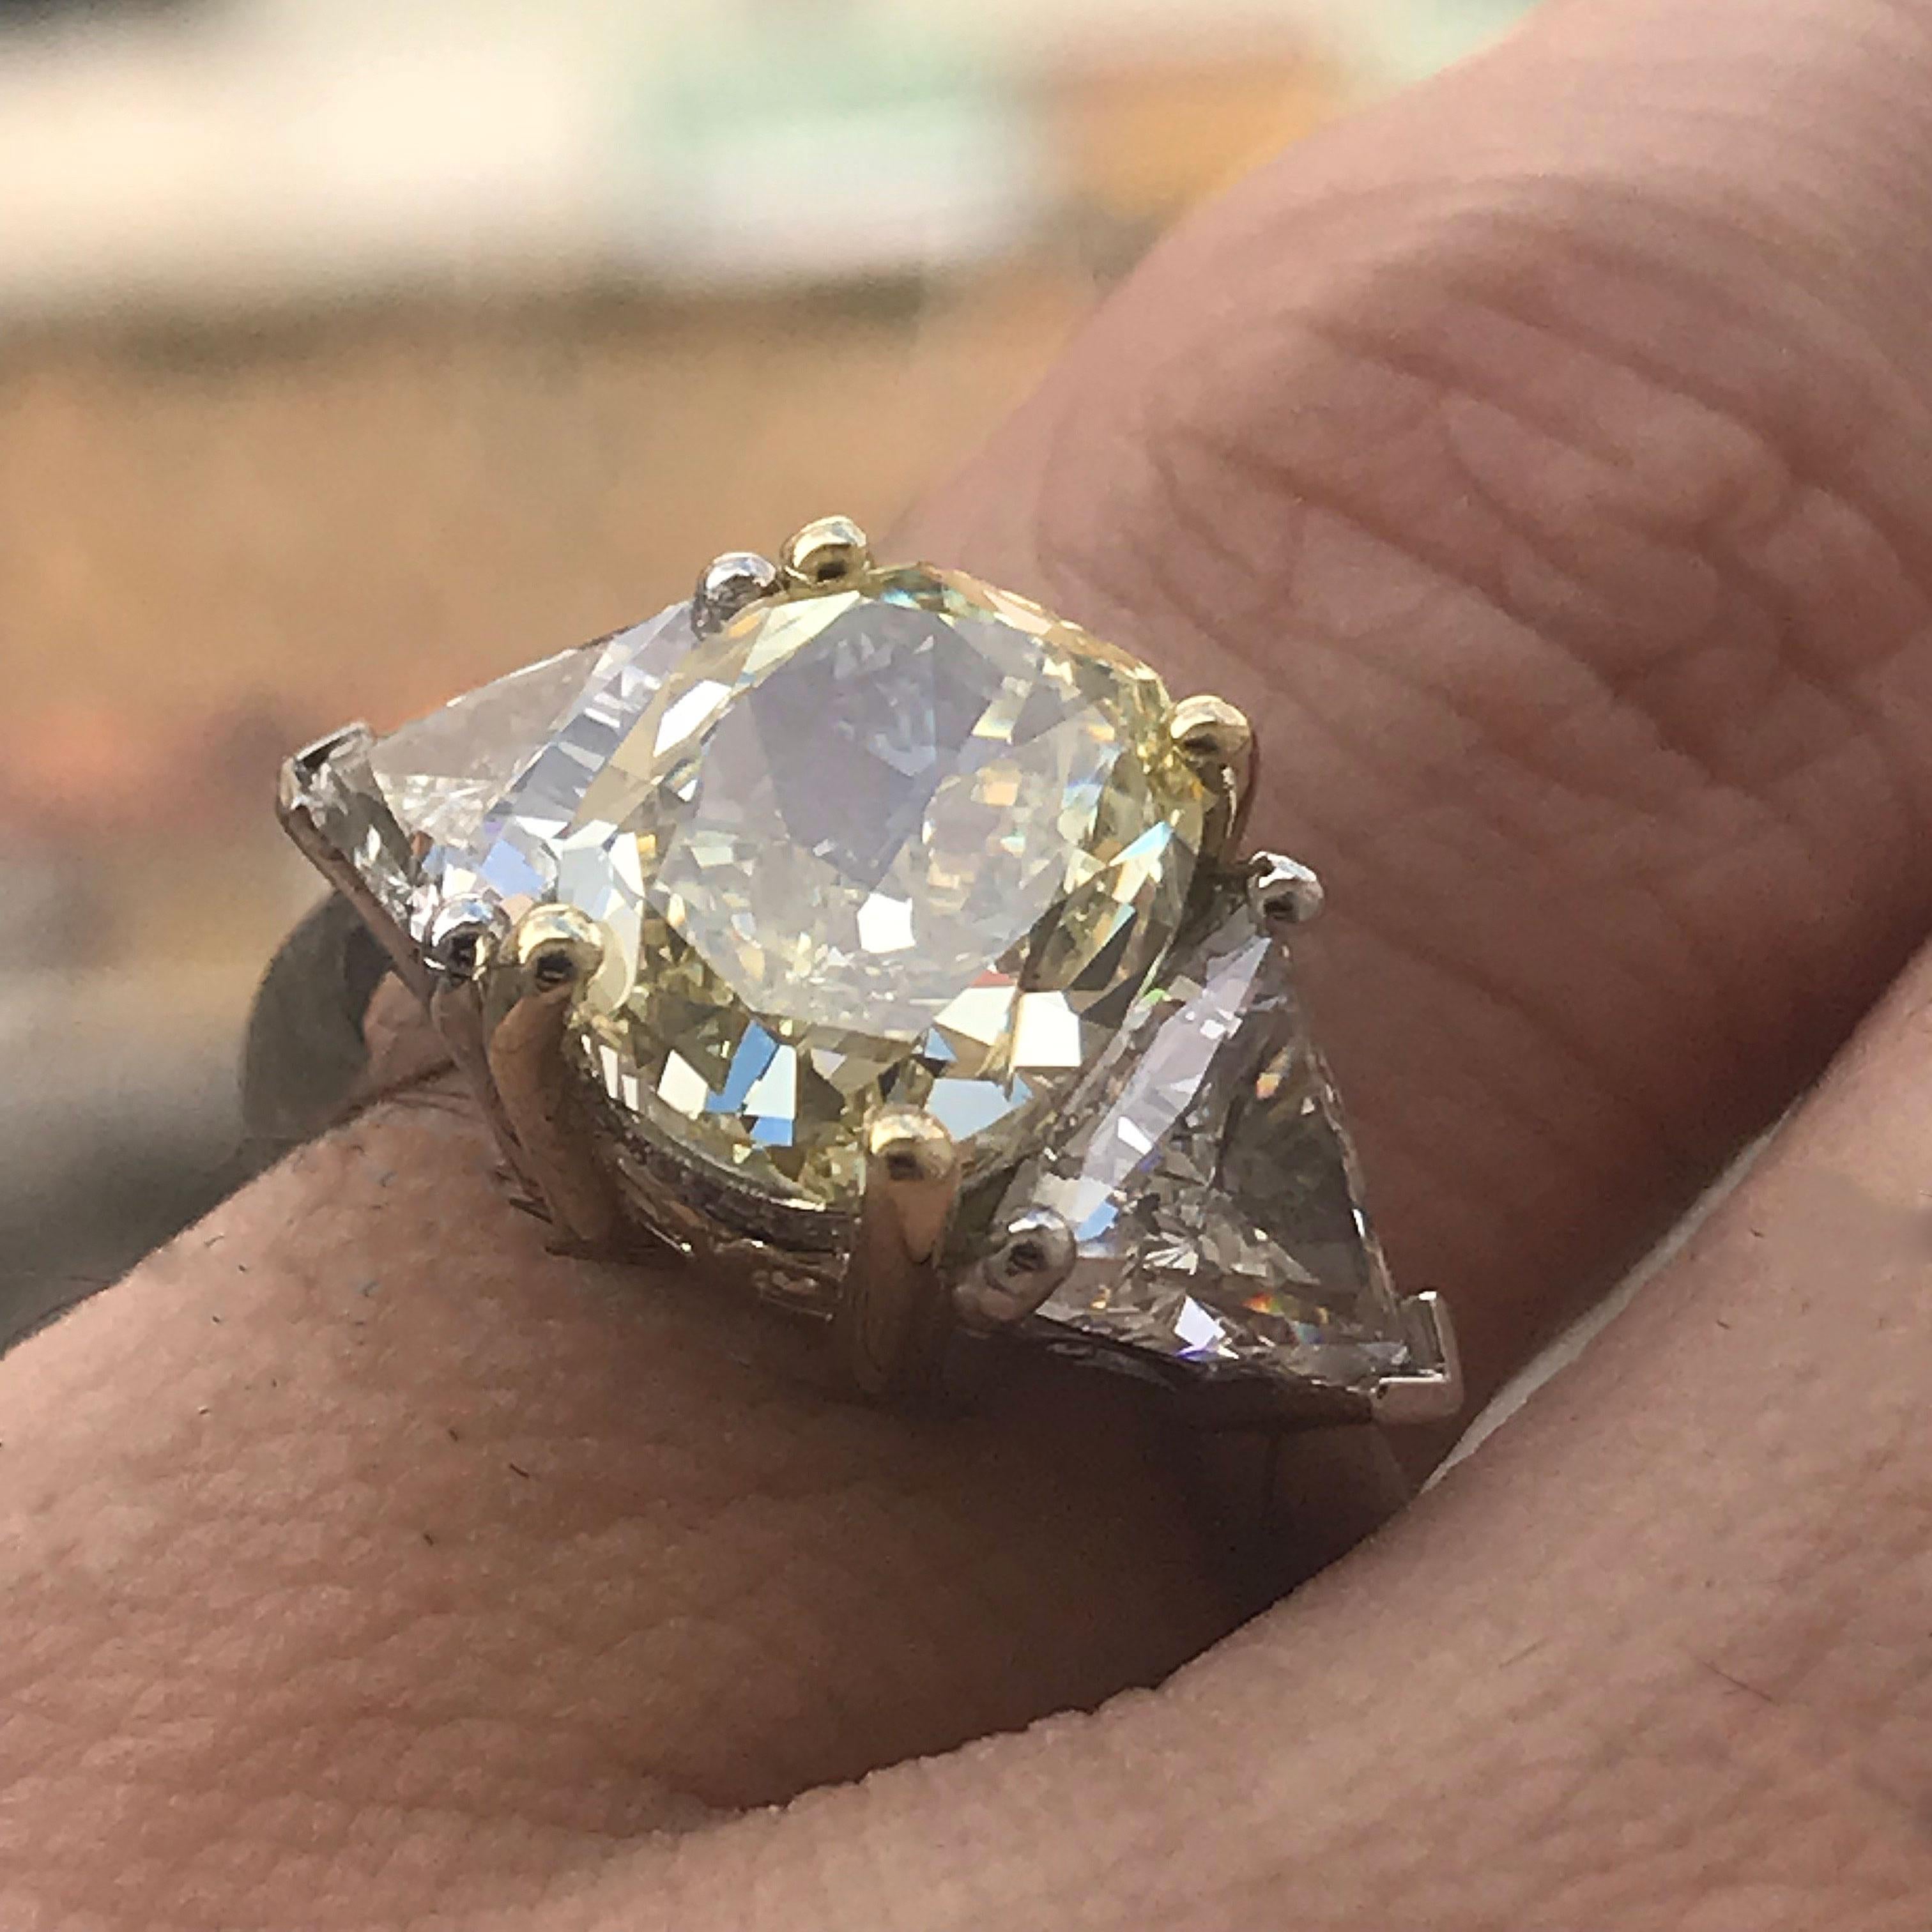 3.7 carat diamond ring